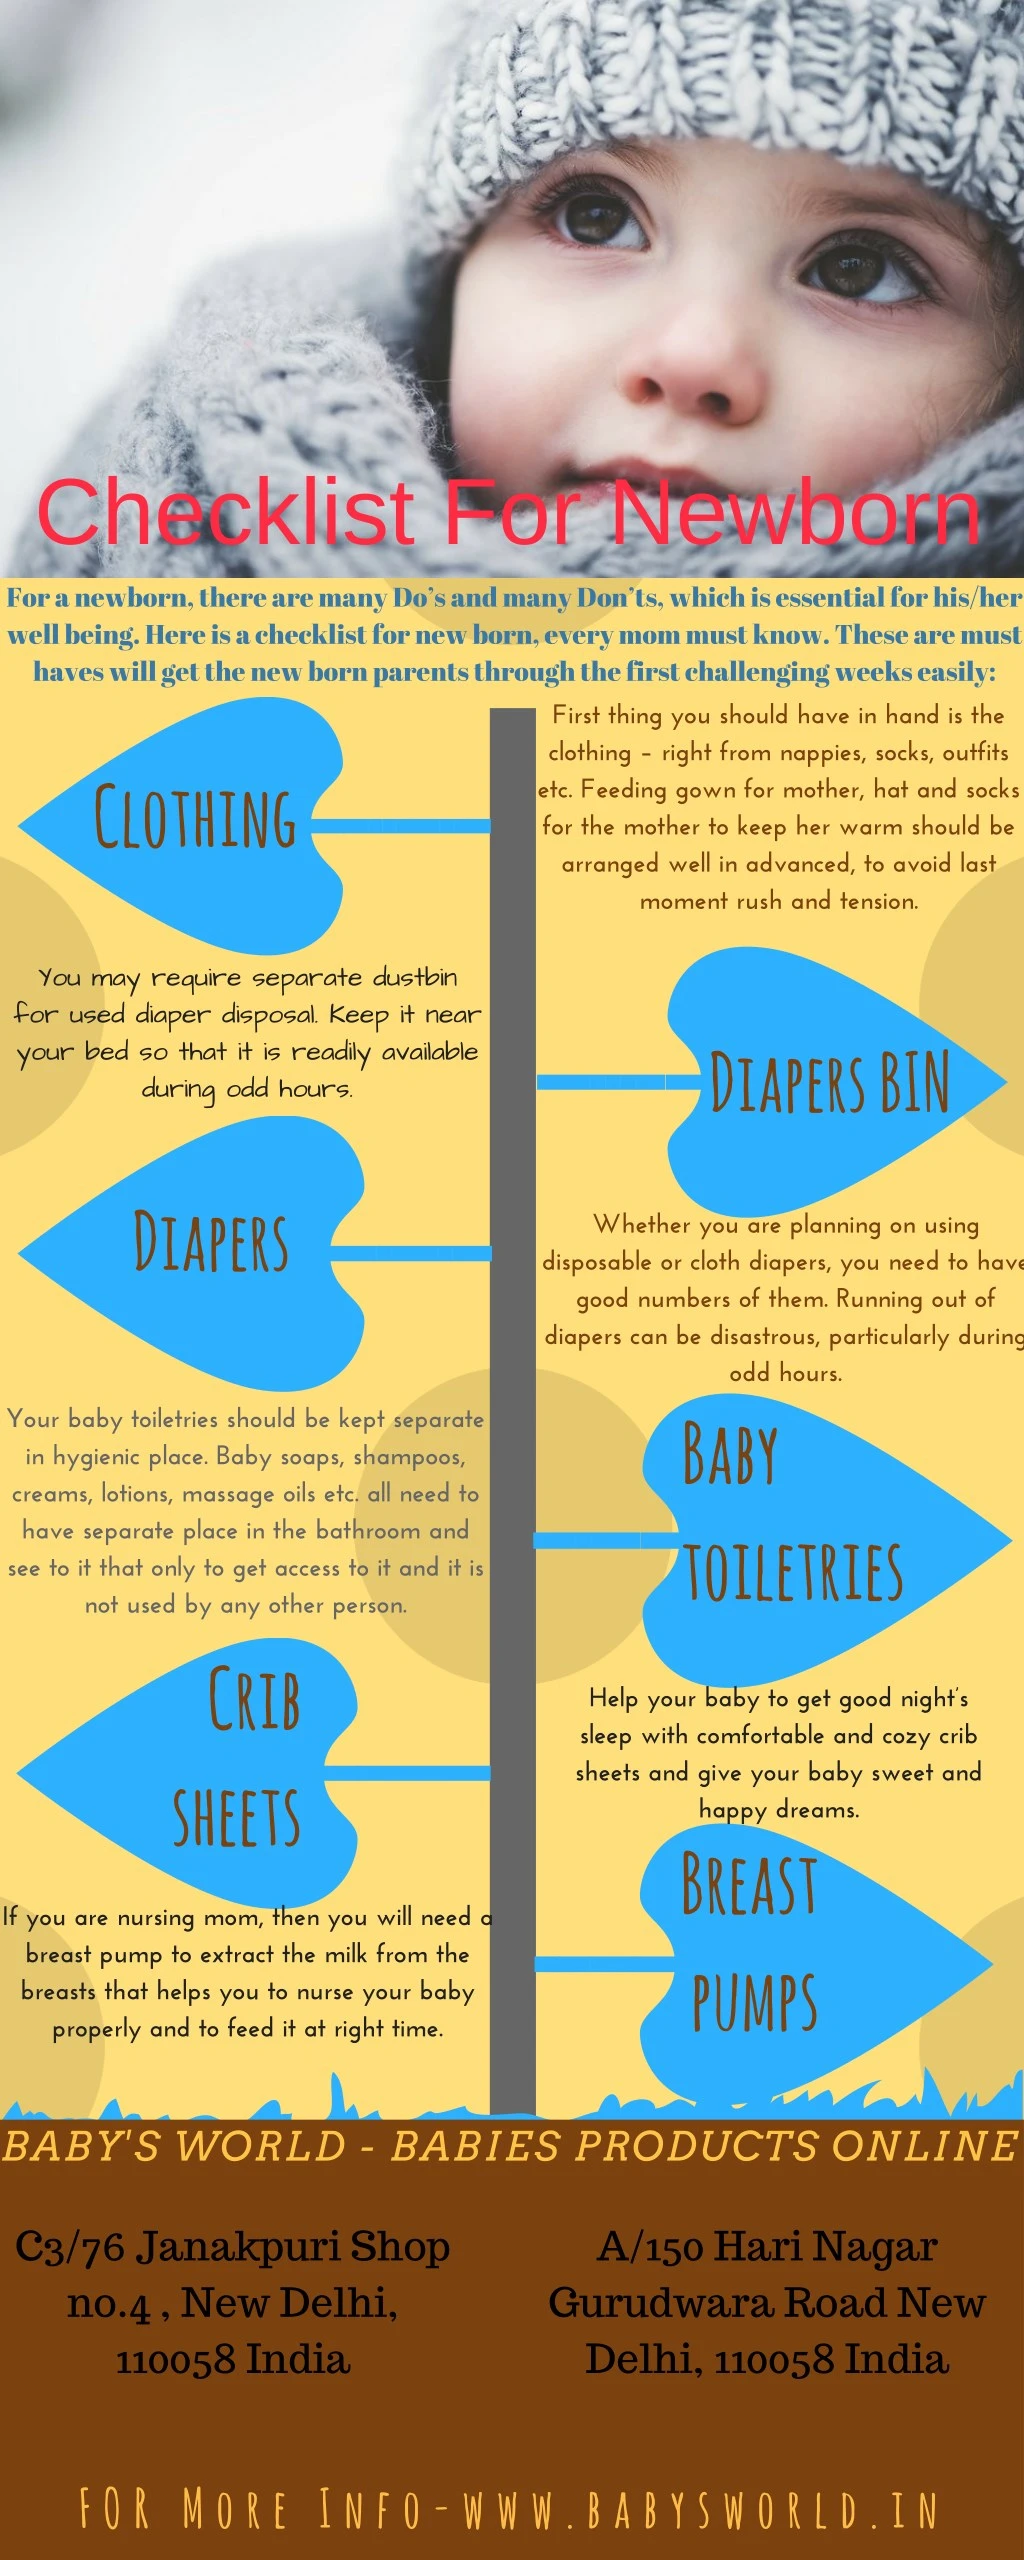 checklist for newborn